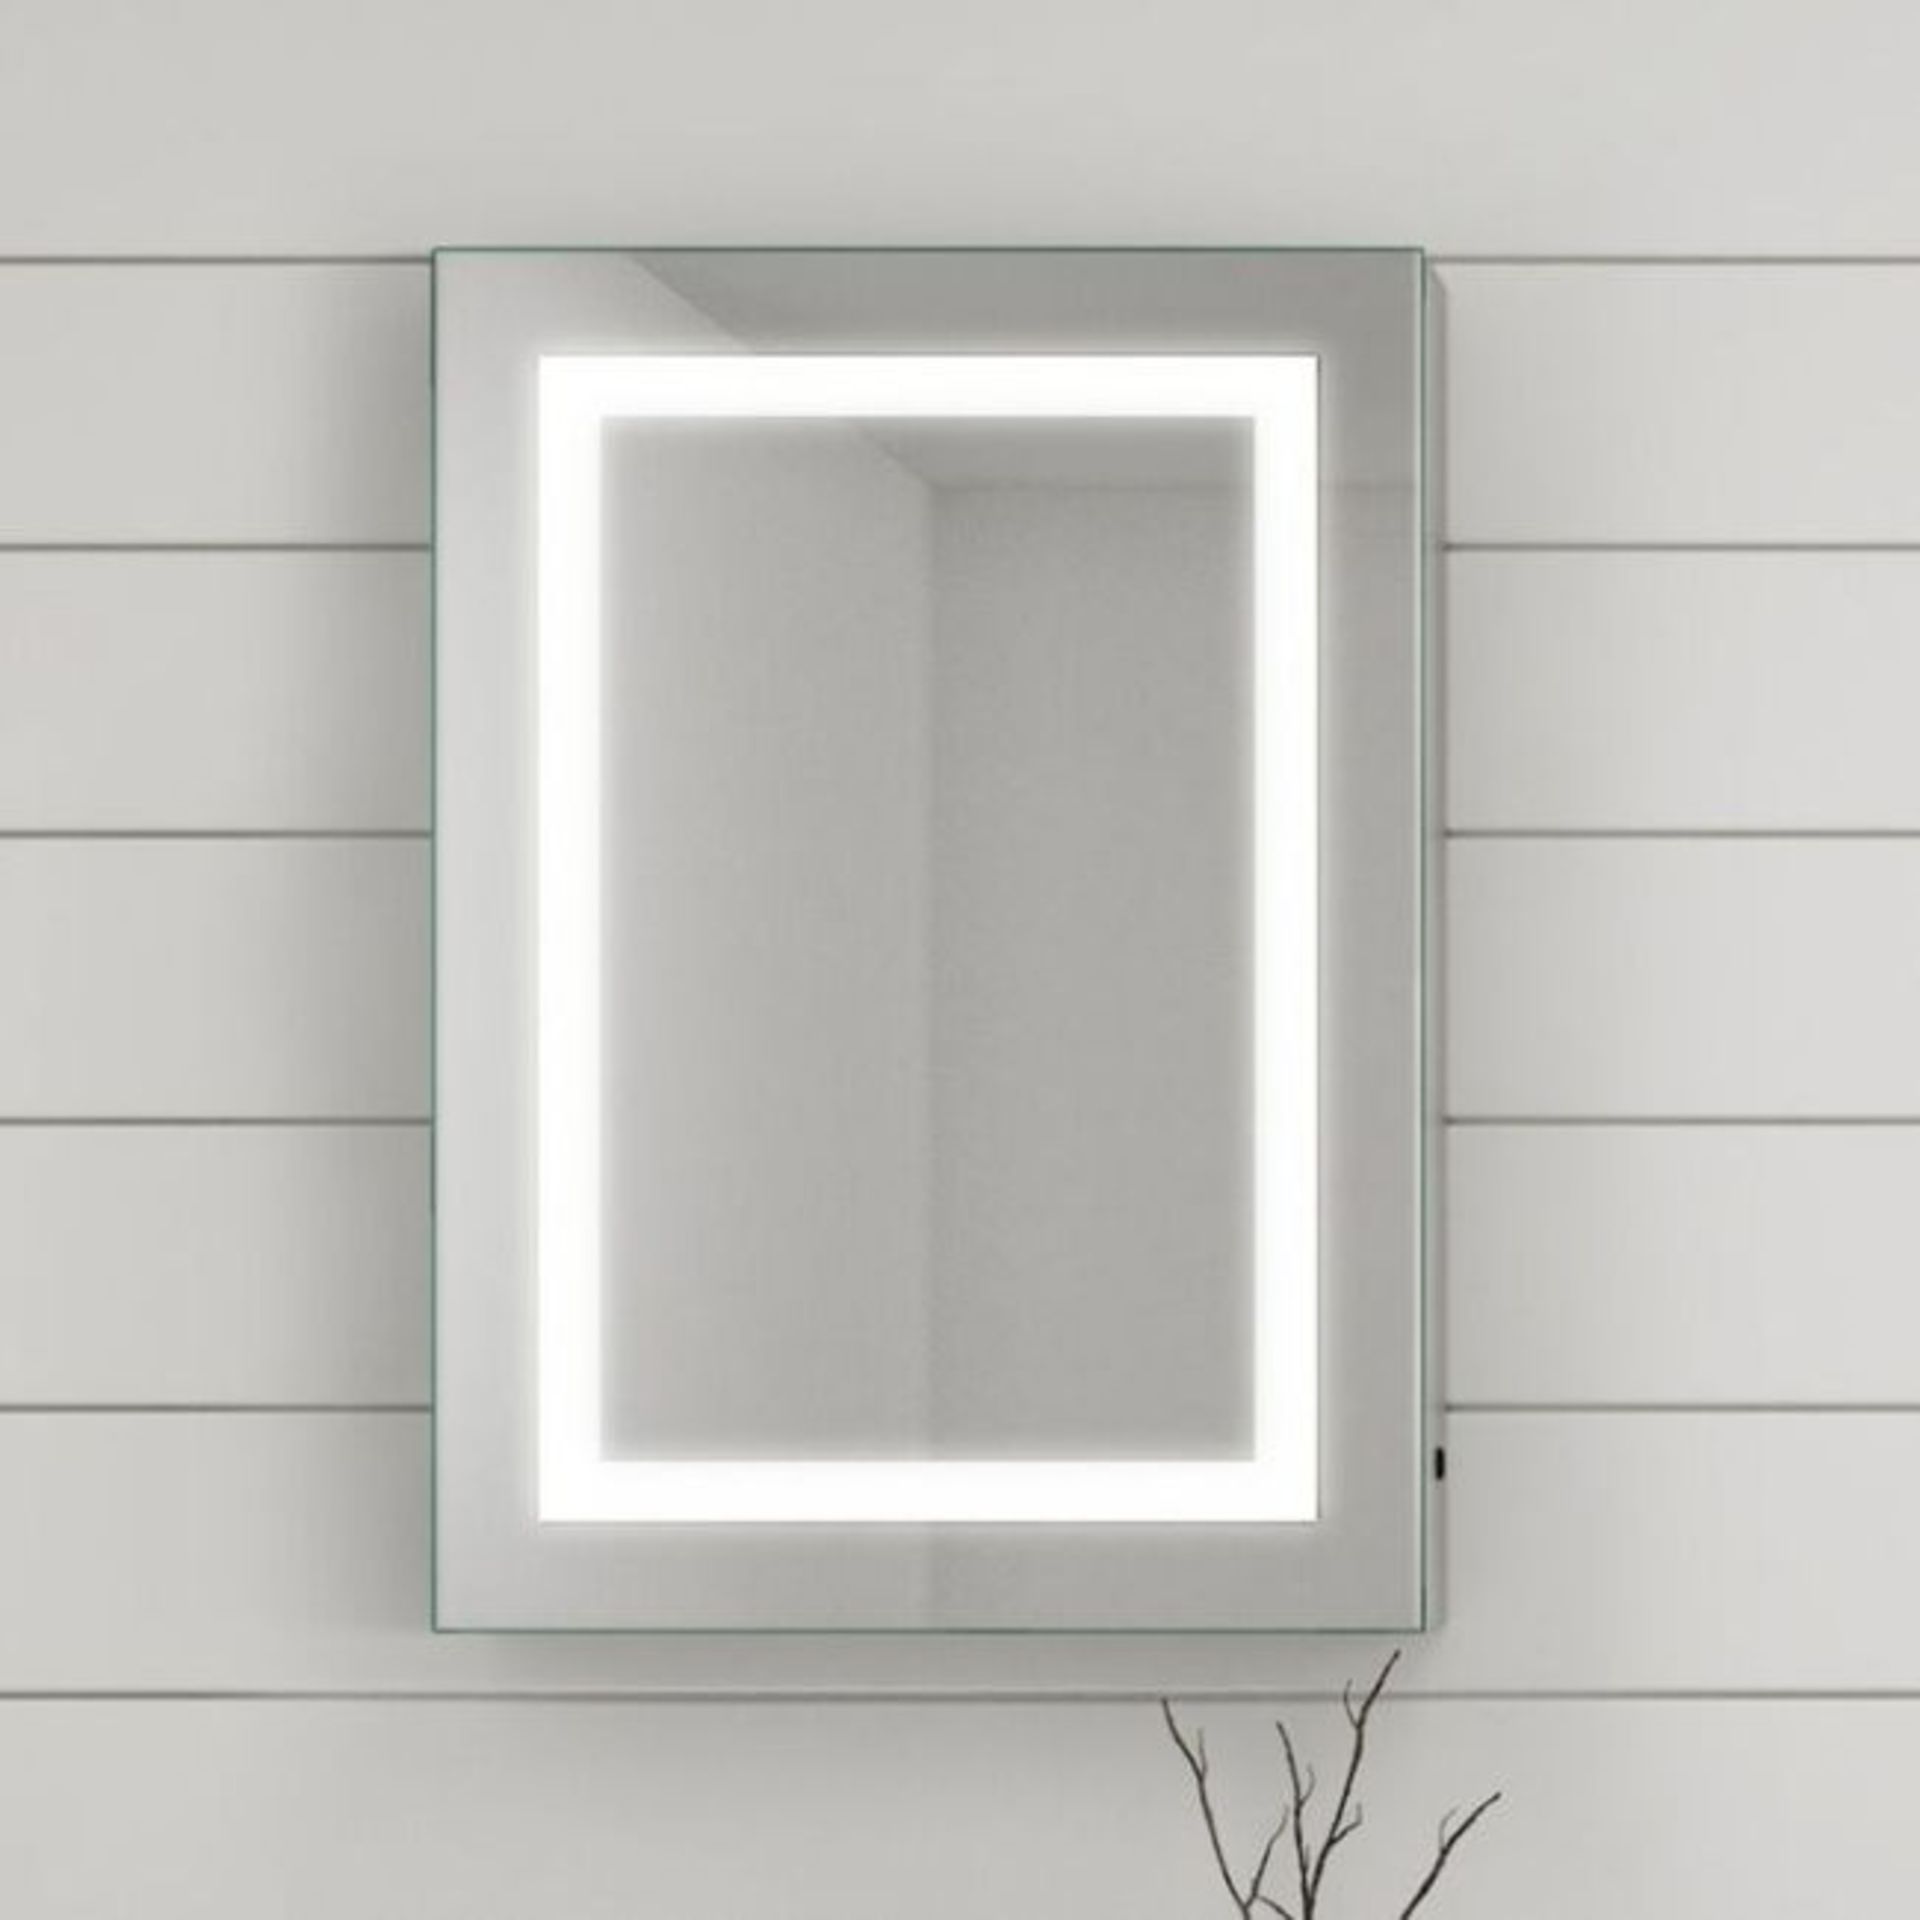 New 500 x 700mm Nova Illuminated Led Mirror Cabinet. Rrp £599.99 Mc160.We Love This Mirror Cabinet